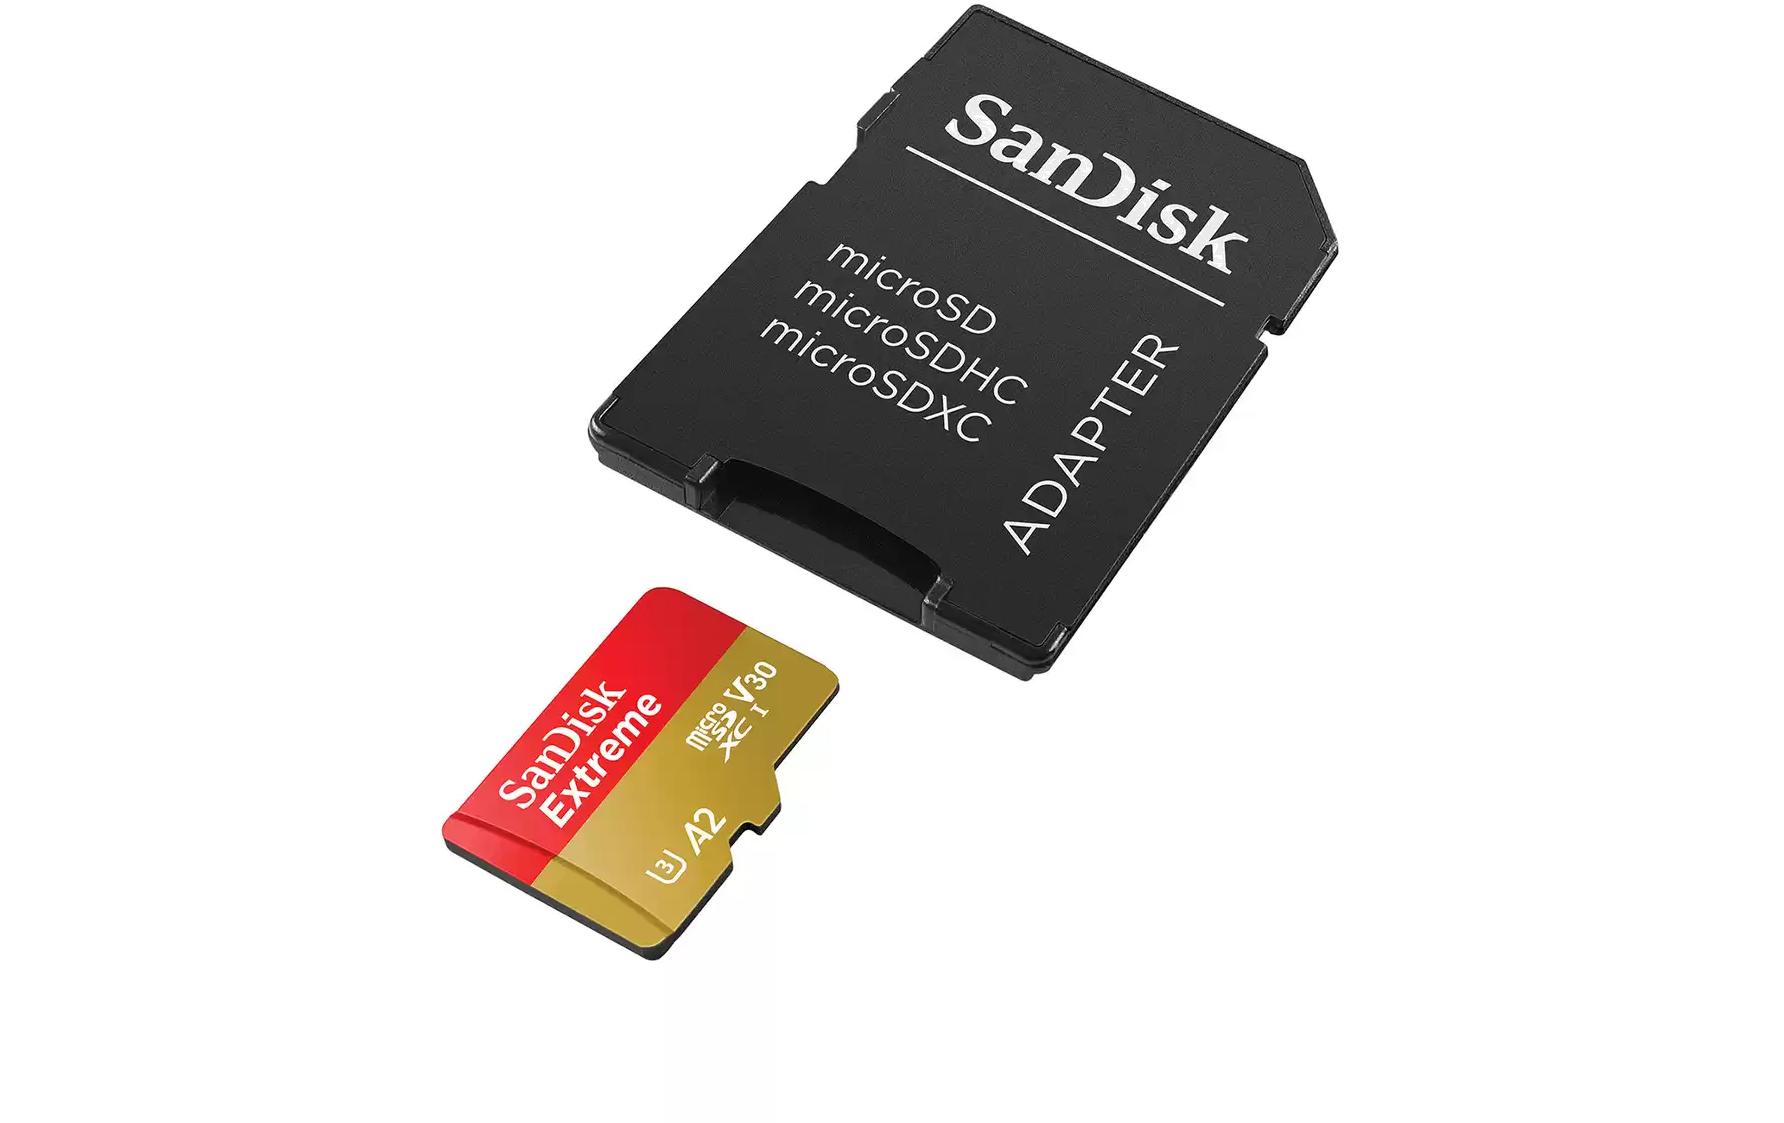 SanDisk microSDXC-Karte Extreme 1000 GB